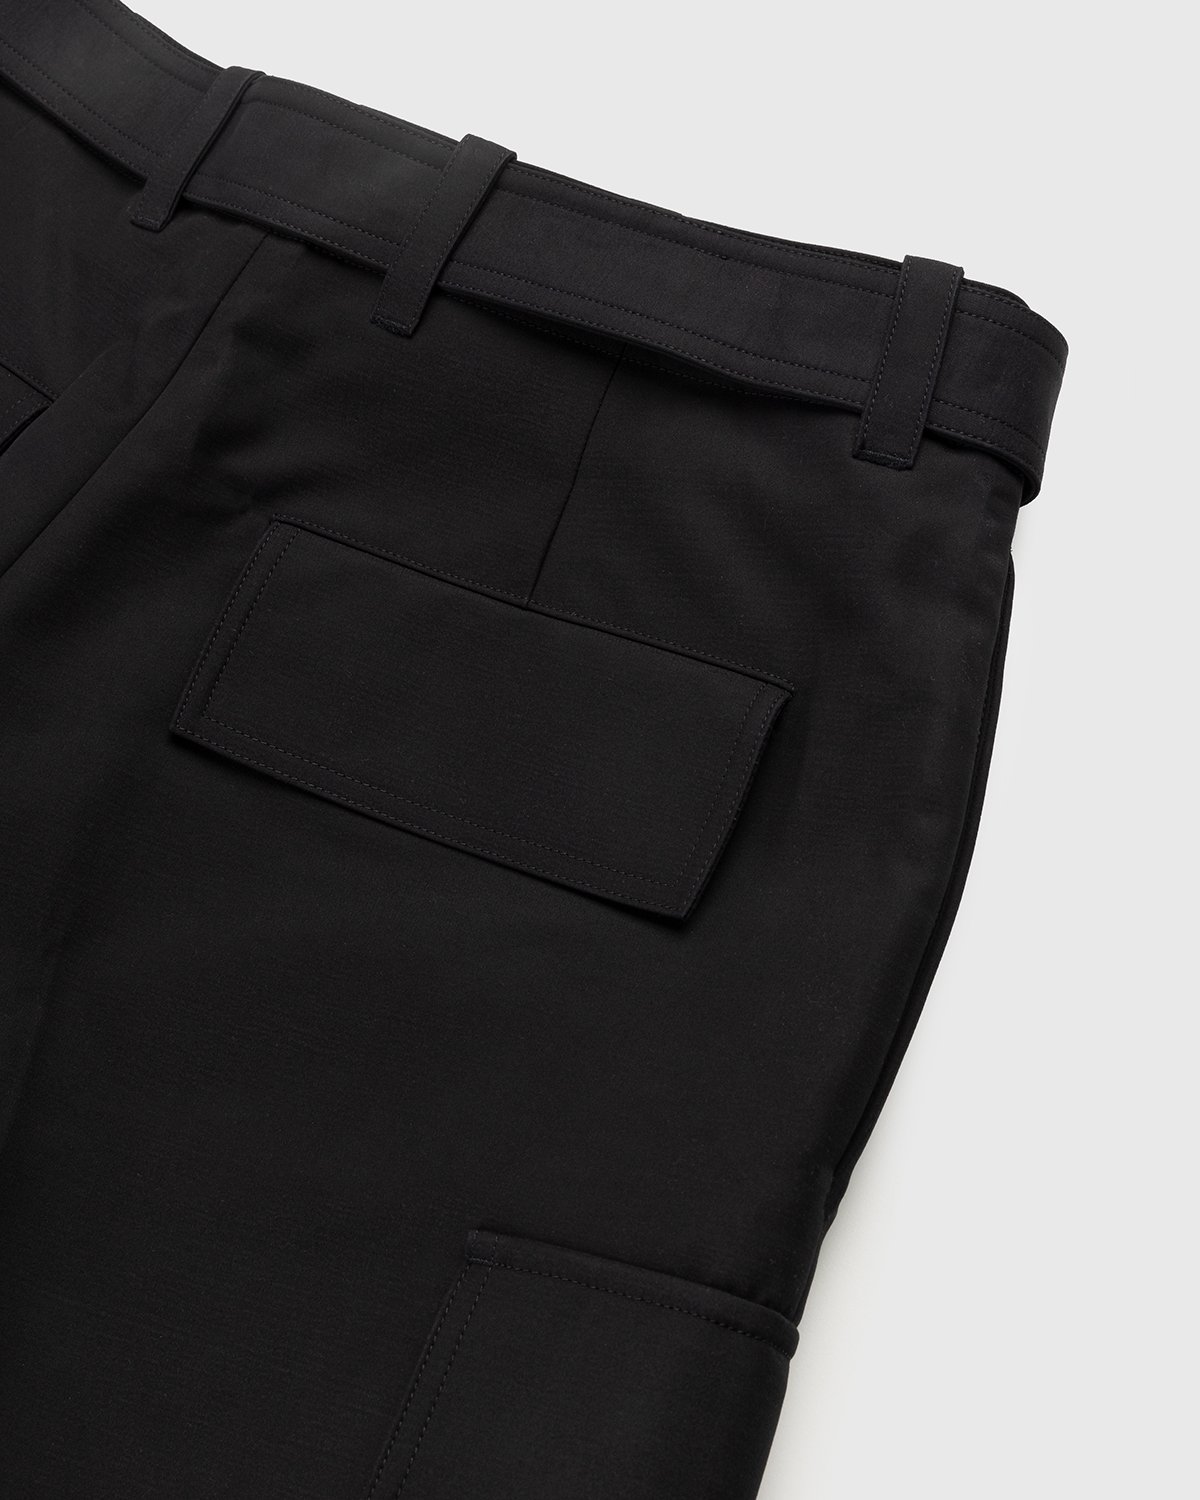 Jil Sander - Cotton Cargo Shorts Black - Clothing - Black - Image 4